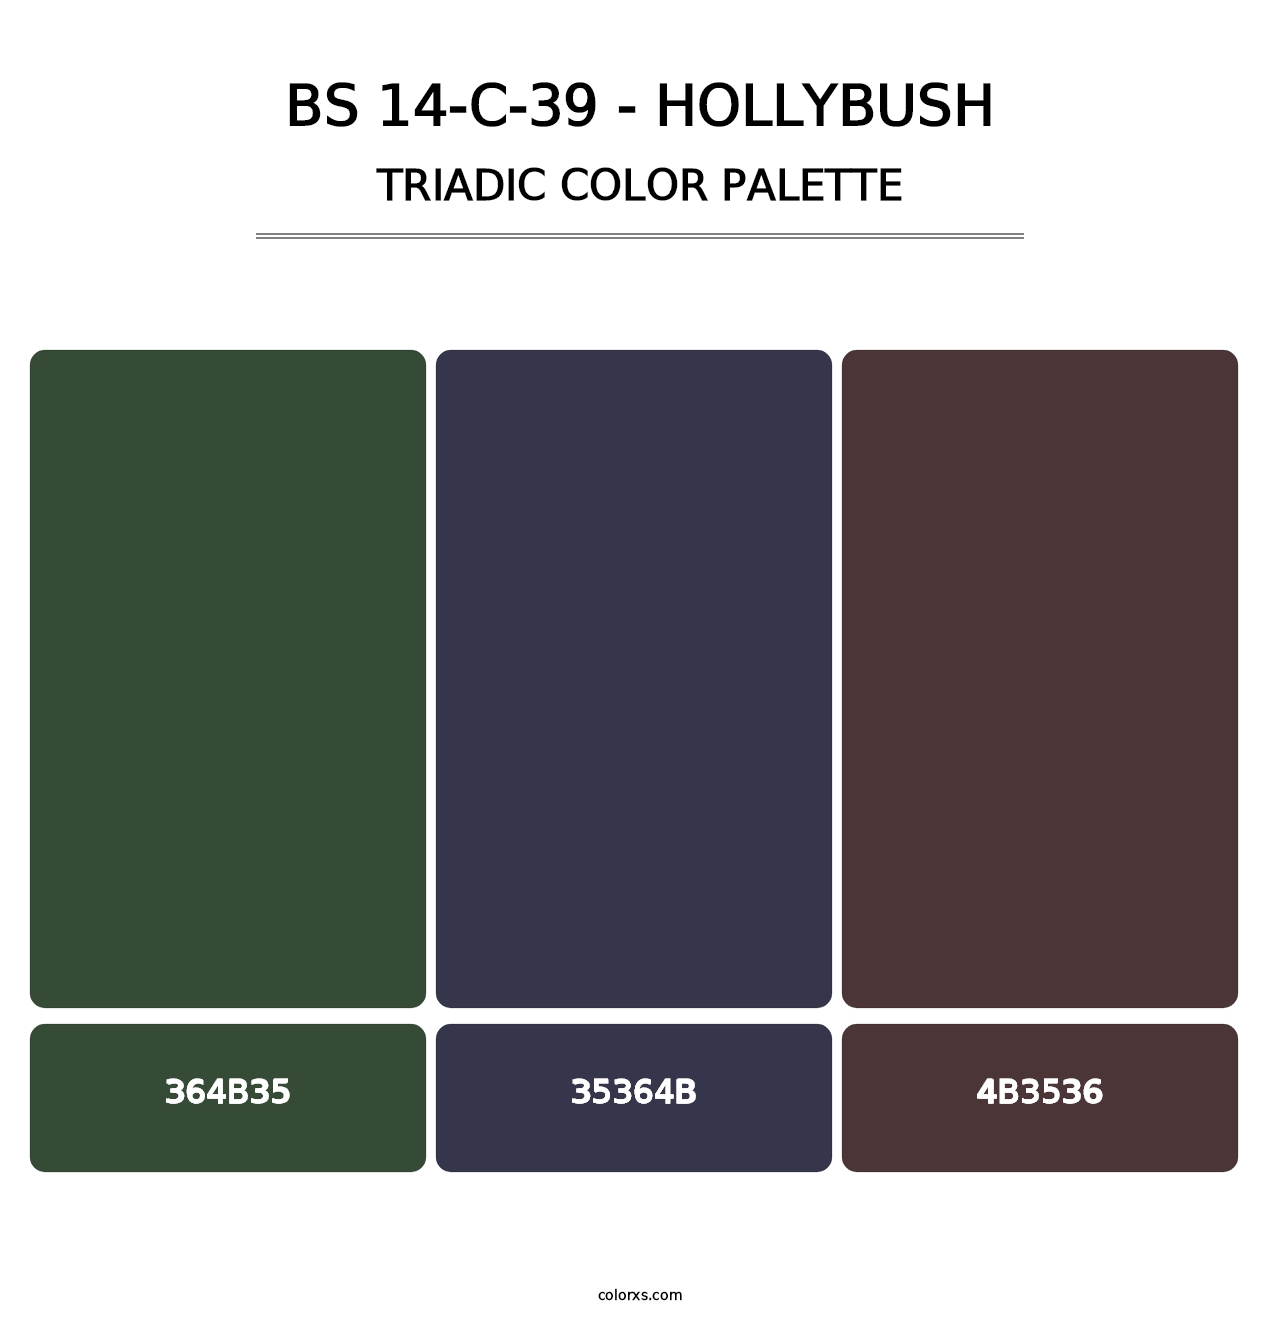 BS 14-C-39 - Hollybush - Triadic Color Palette